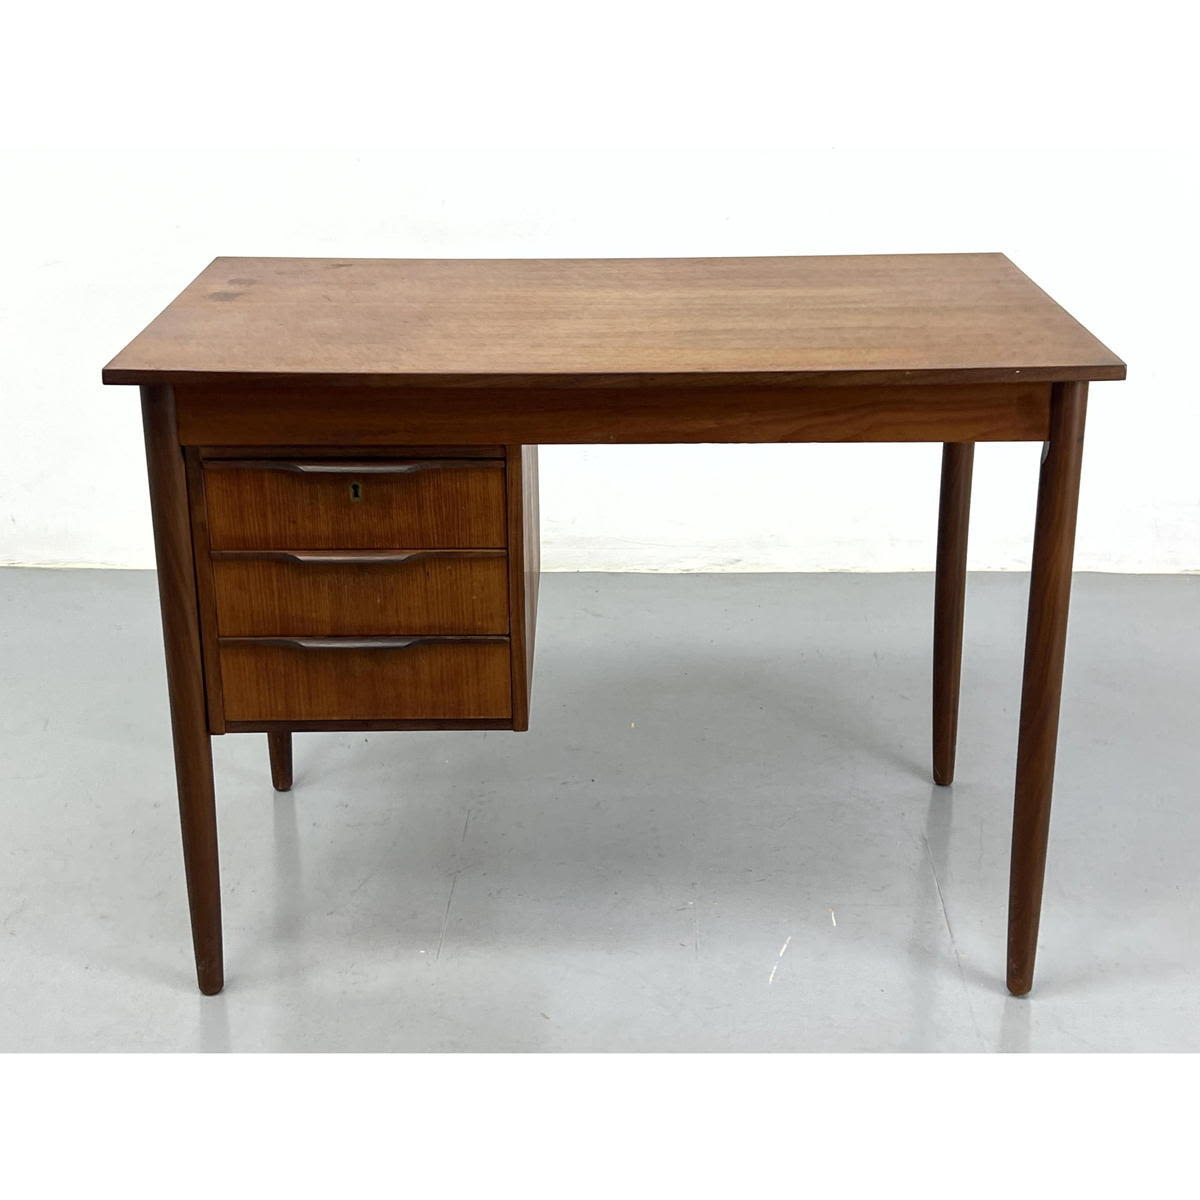 Danish Modern Three Drawer Desk. Tapered